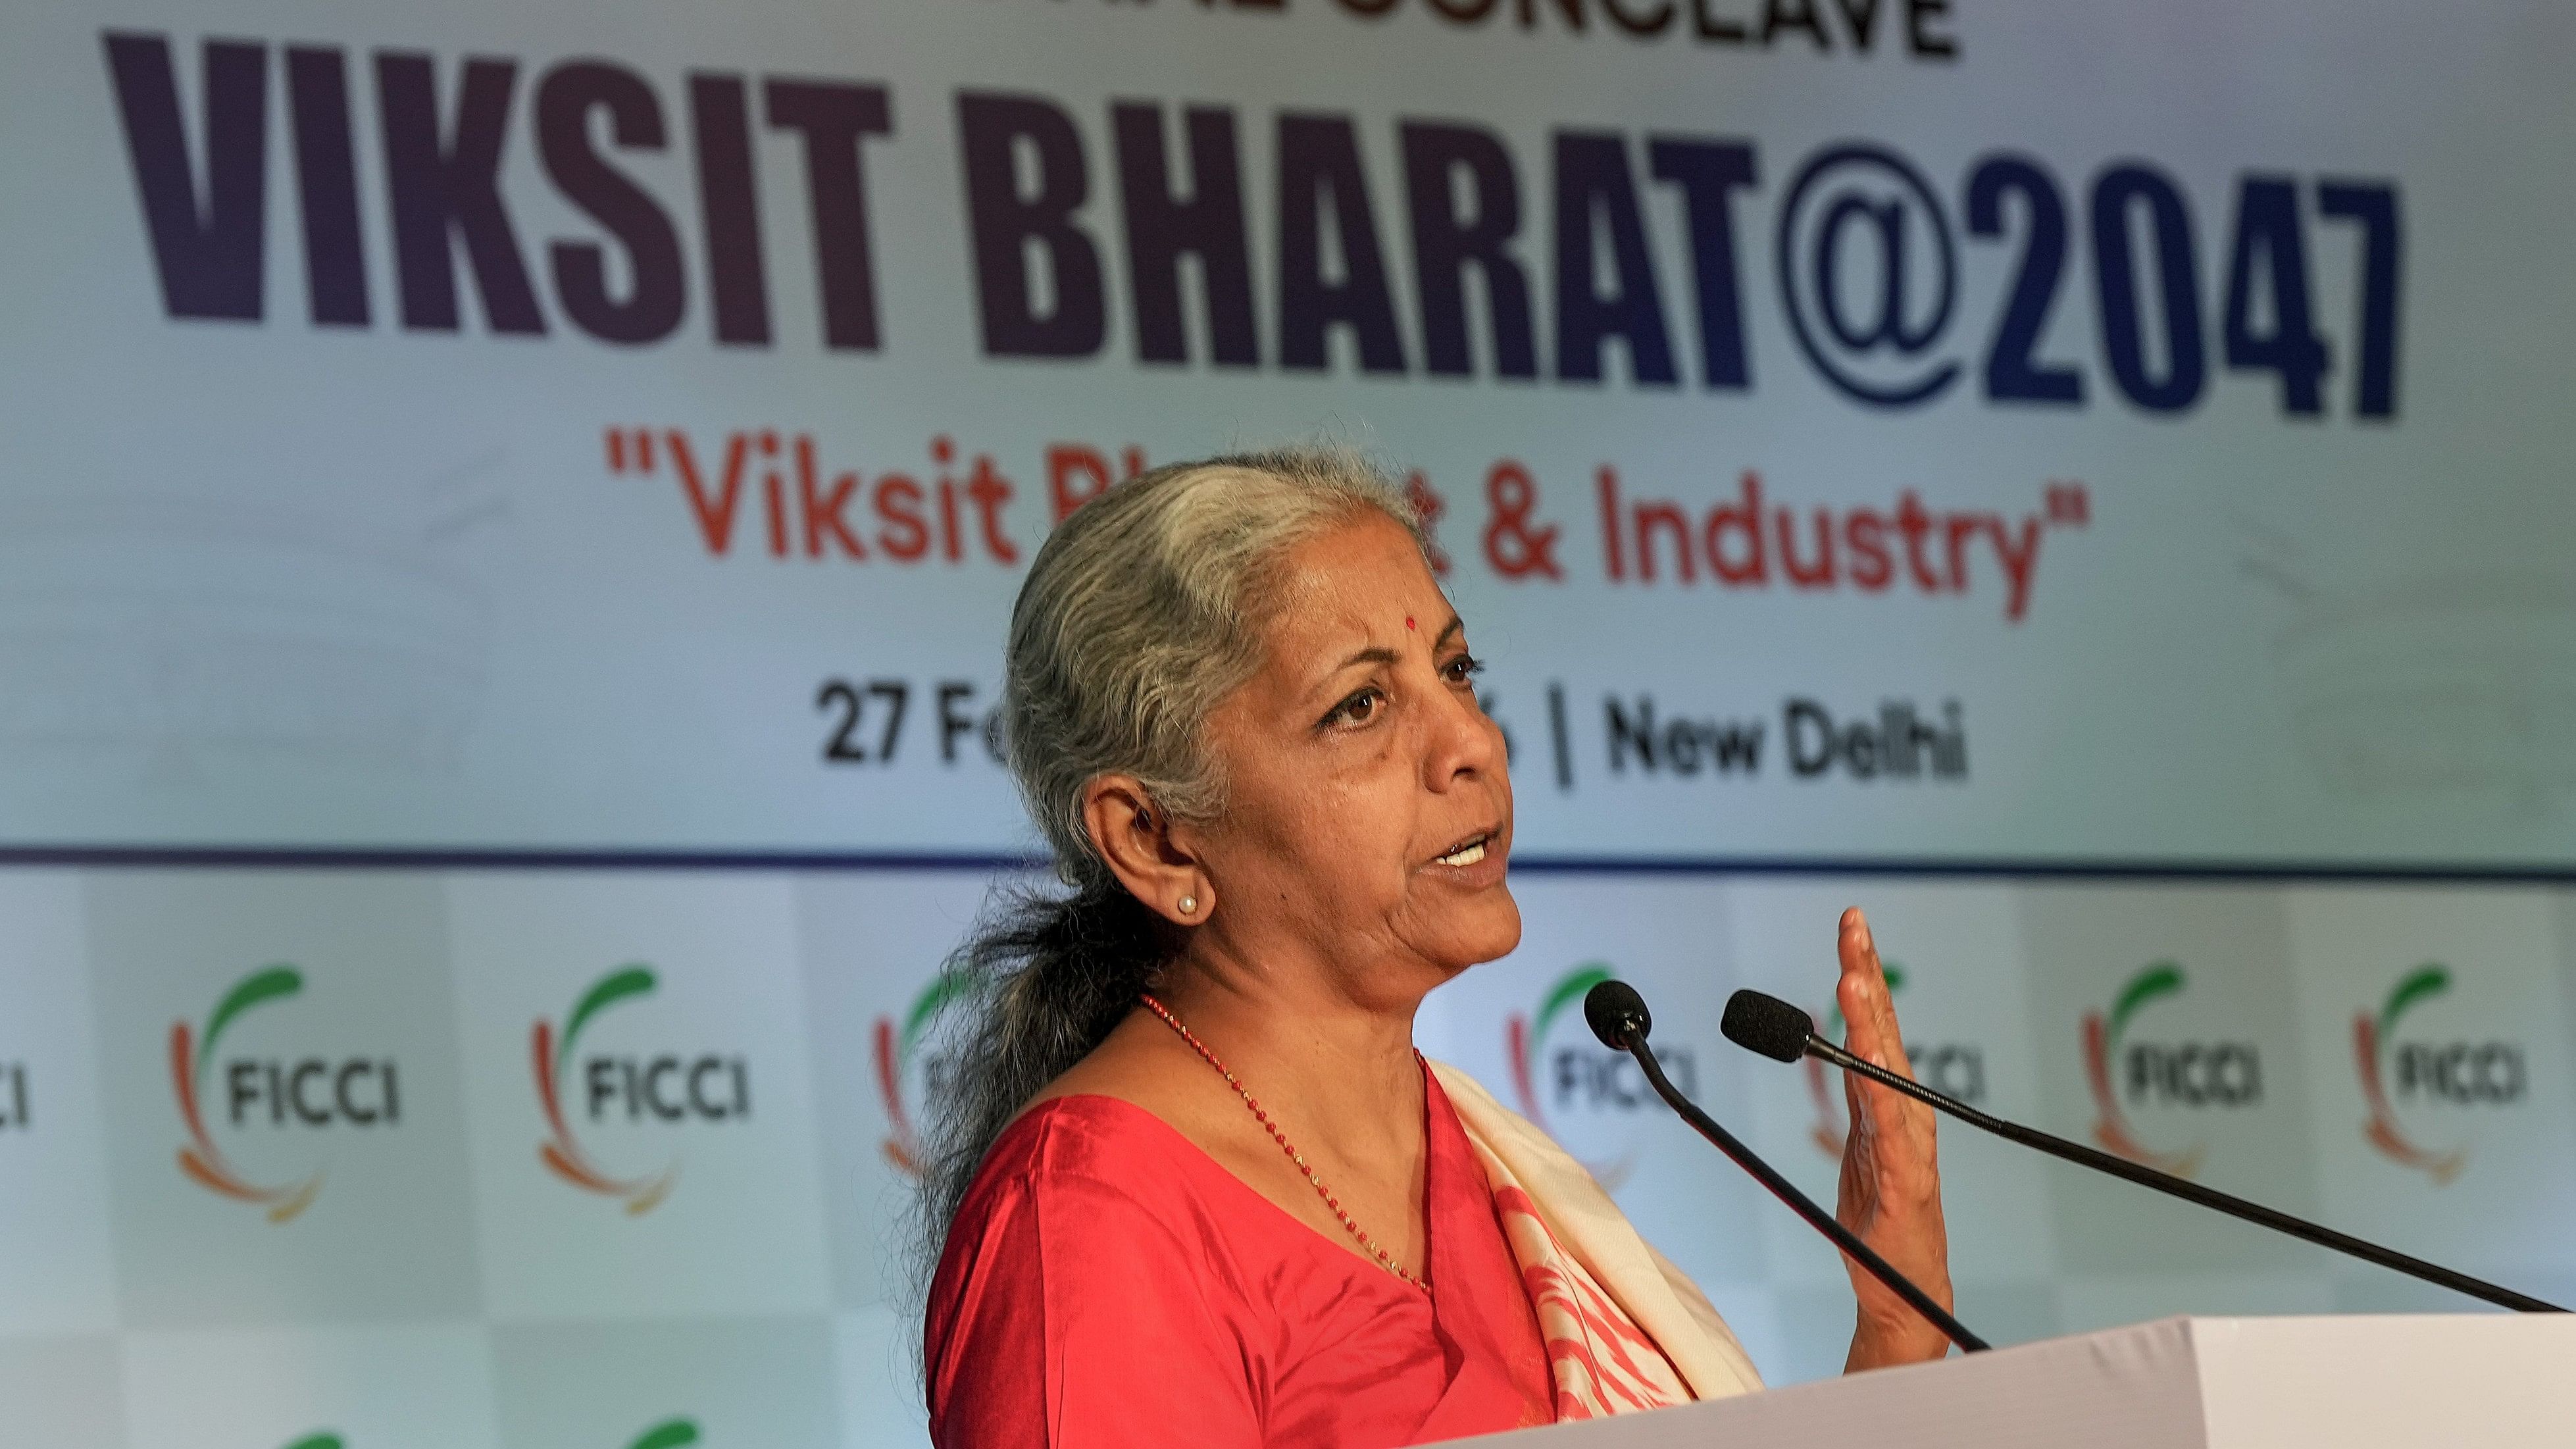 <div class="paragraphs"><p>A photo of Union Finance Minister Nirmala Sitharaman addresses 'Viksit Bharat@2047' national conclave, in New Delhi.</p></div>